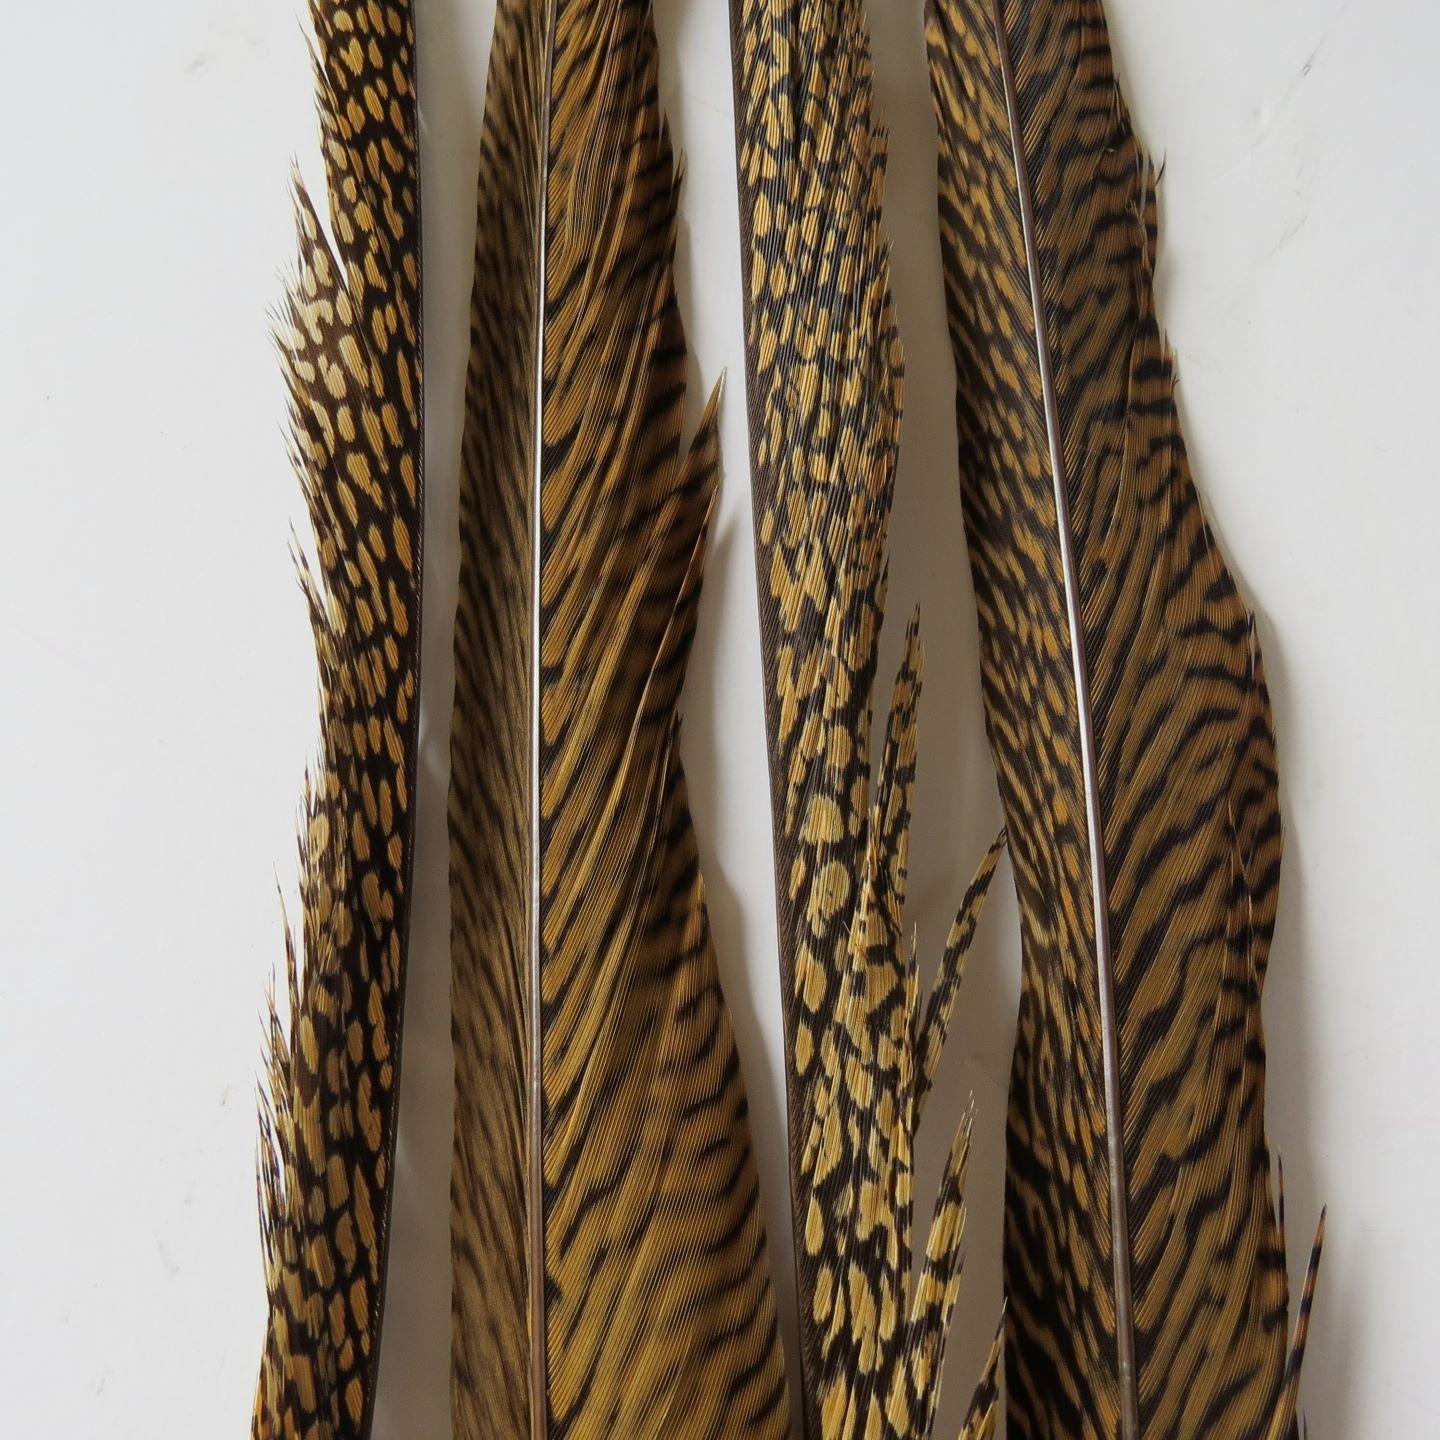 Golden Pheasant Tail Feathers - Feathergirl